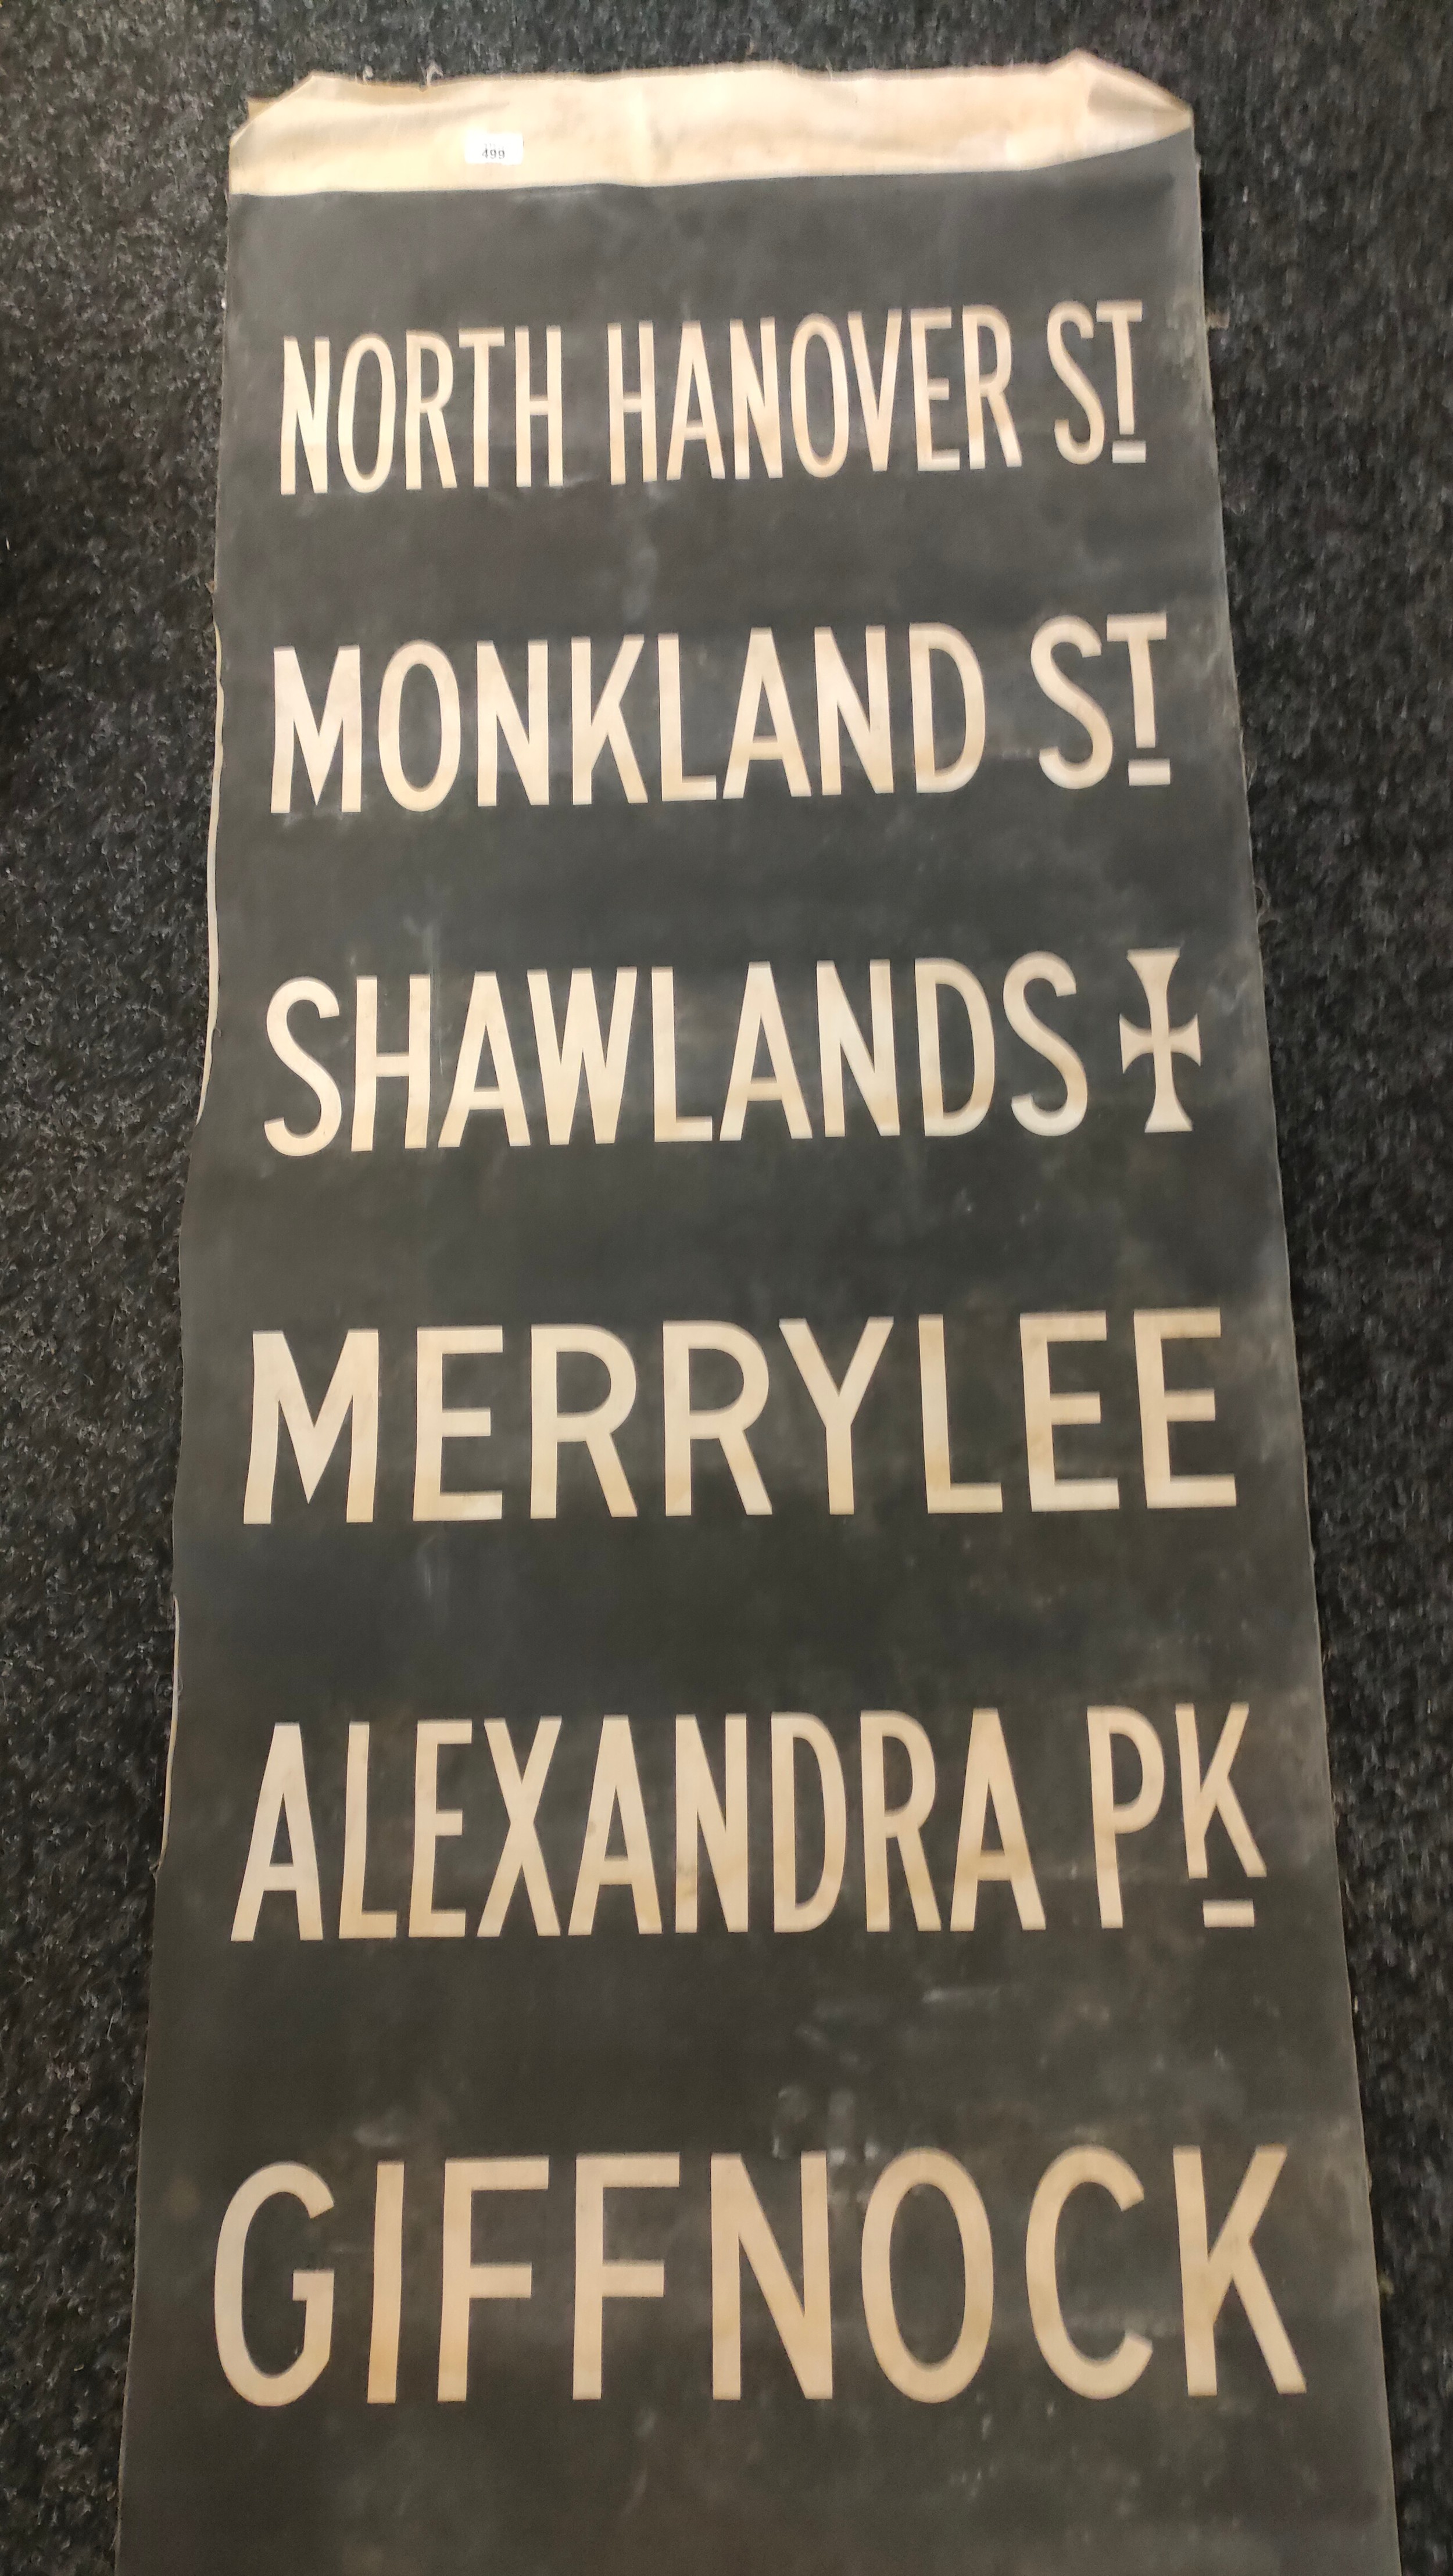 Antique Glasgow Bus advertising street name banner [1340x65]